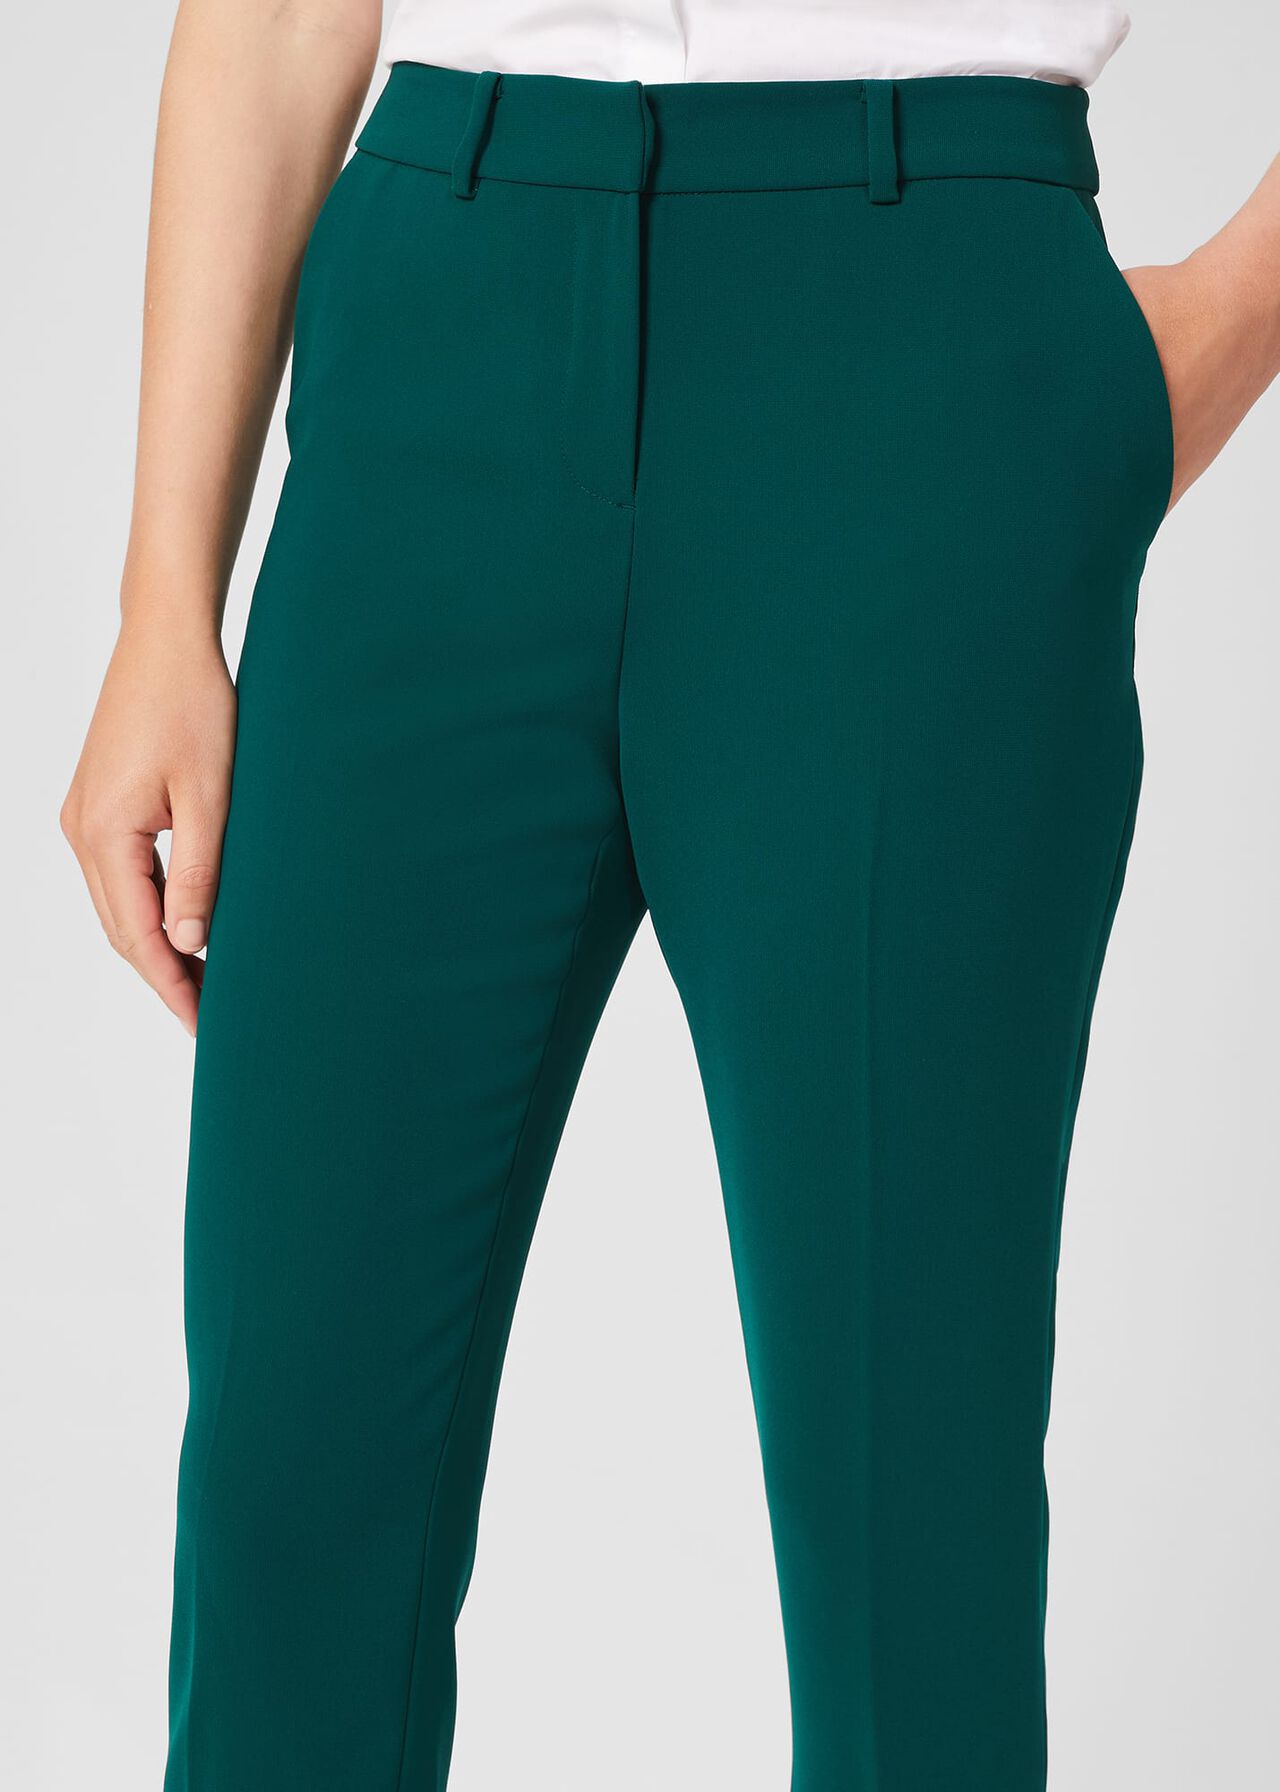 Adelia Tapered Pants, Leaf Green, hi-res